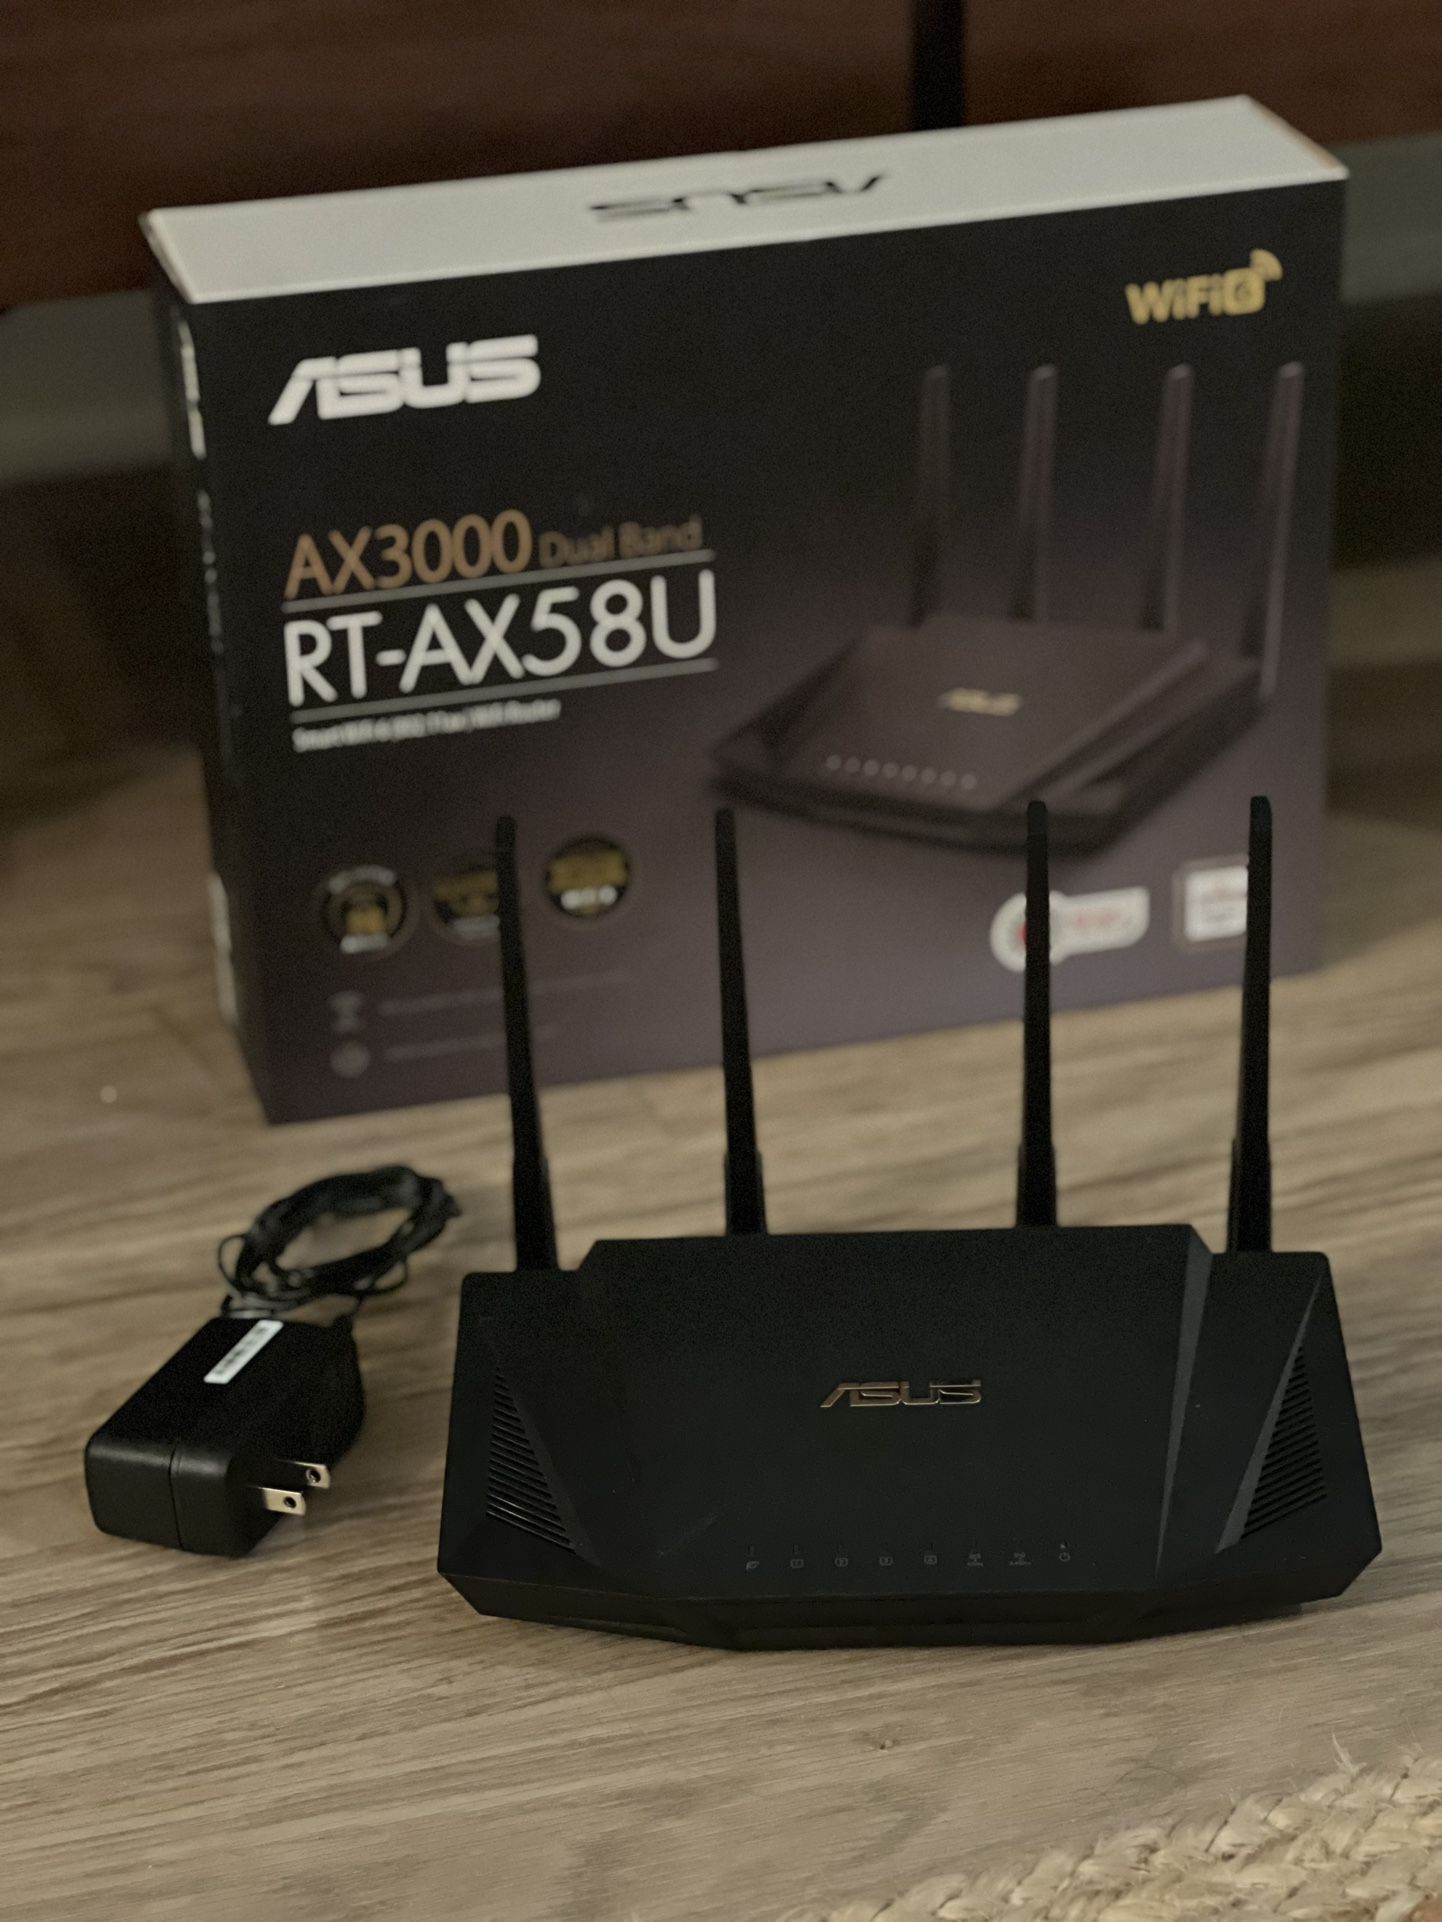 Asus Router (AX3000 RT-AX58U) Local Pickup